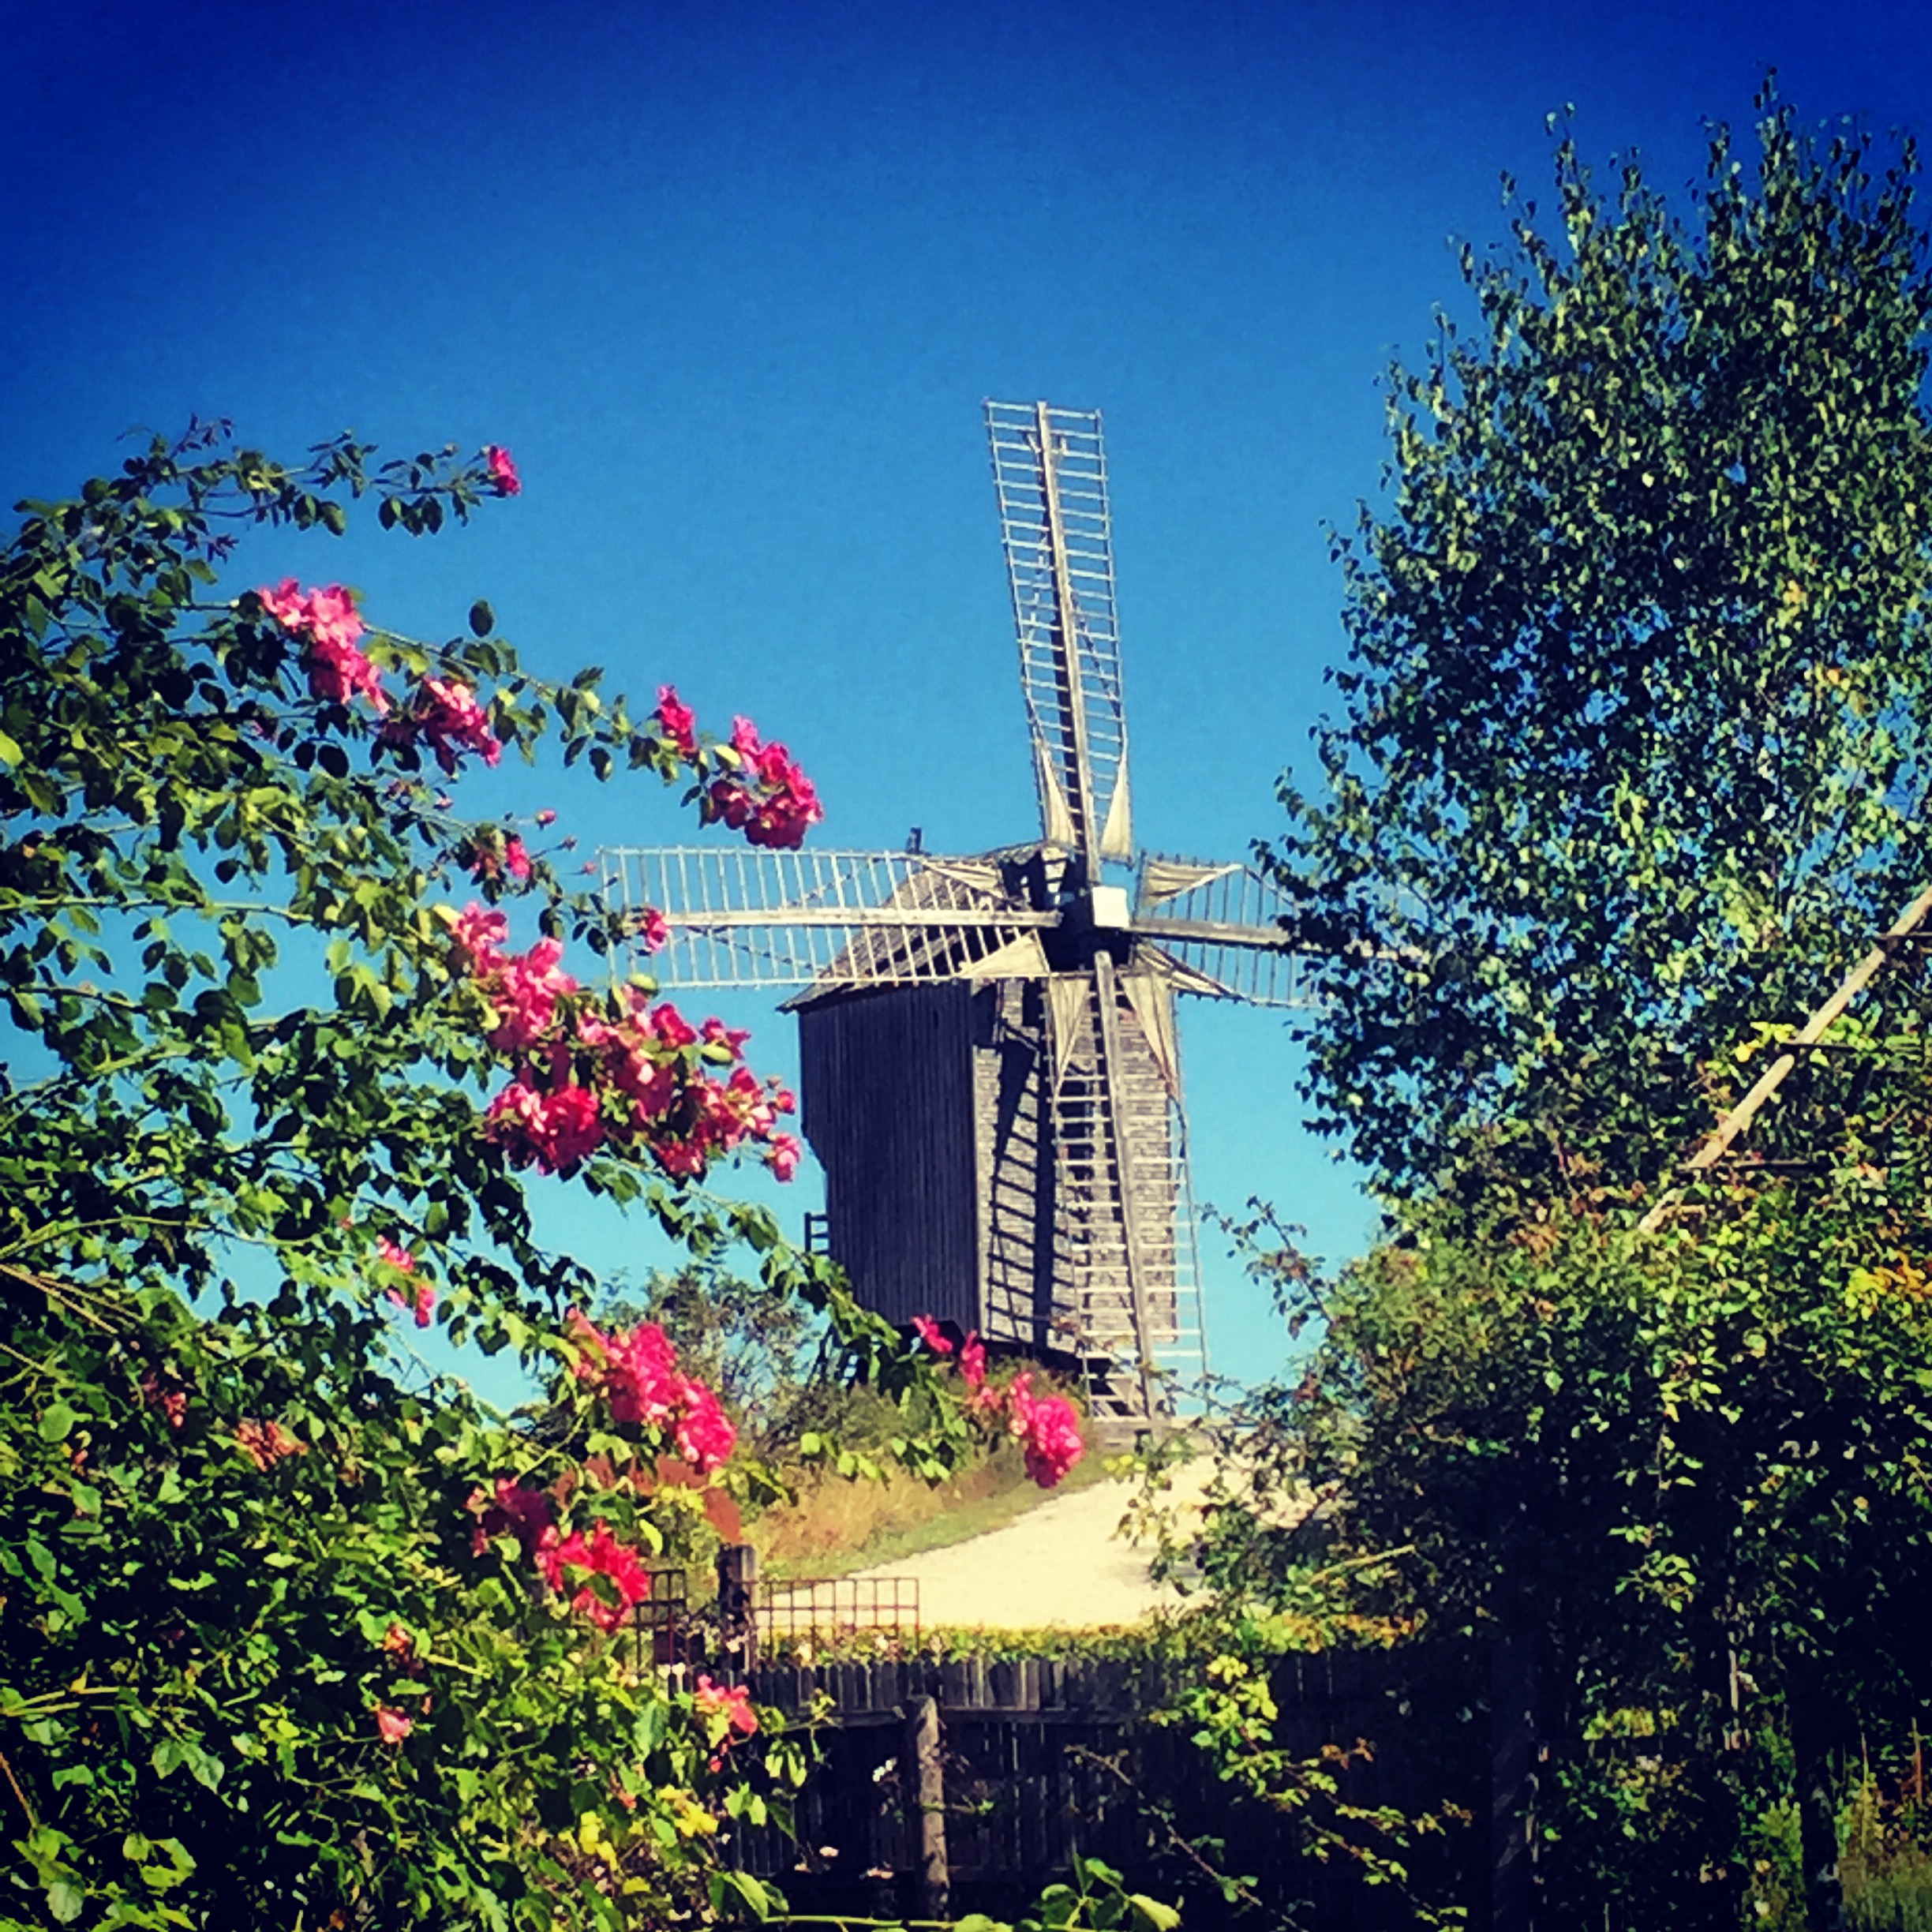 Dosches windmill (photo: SHD)